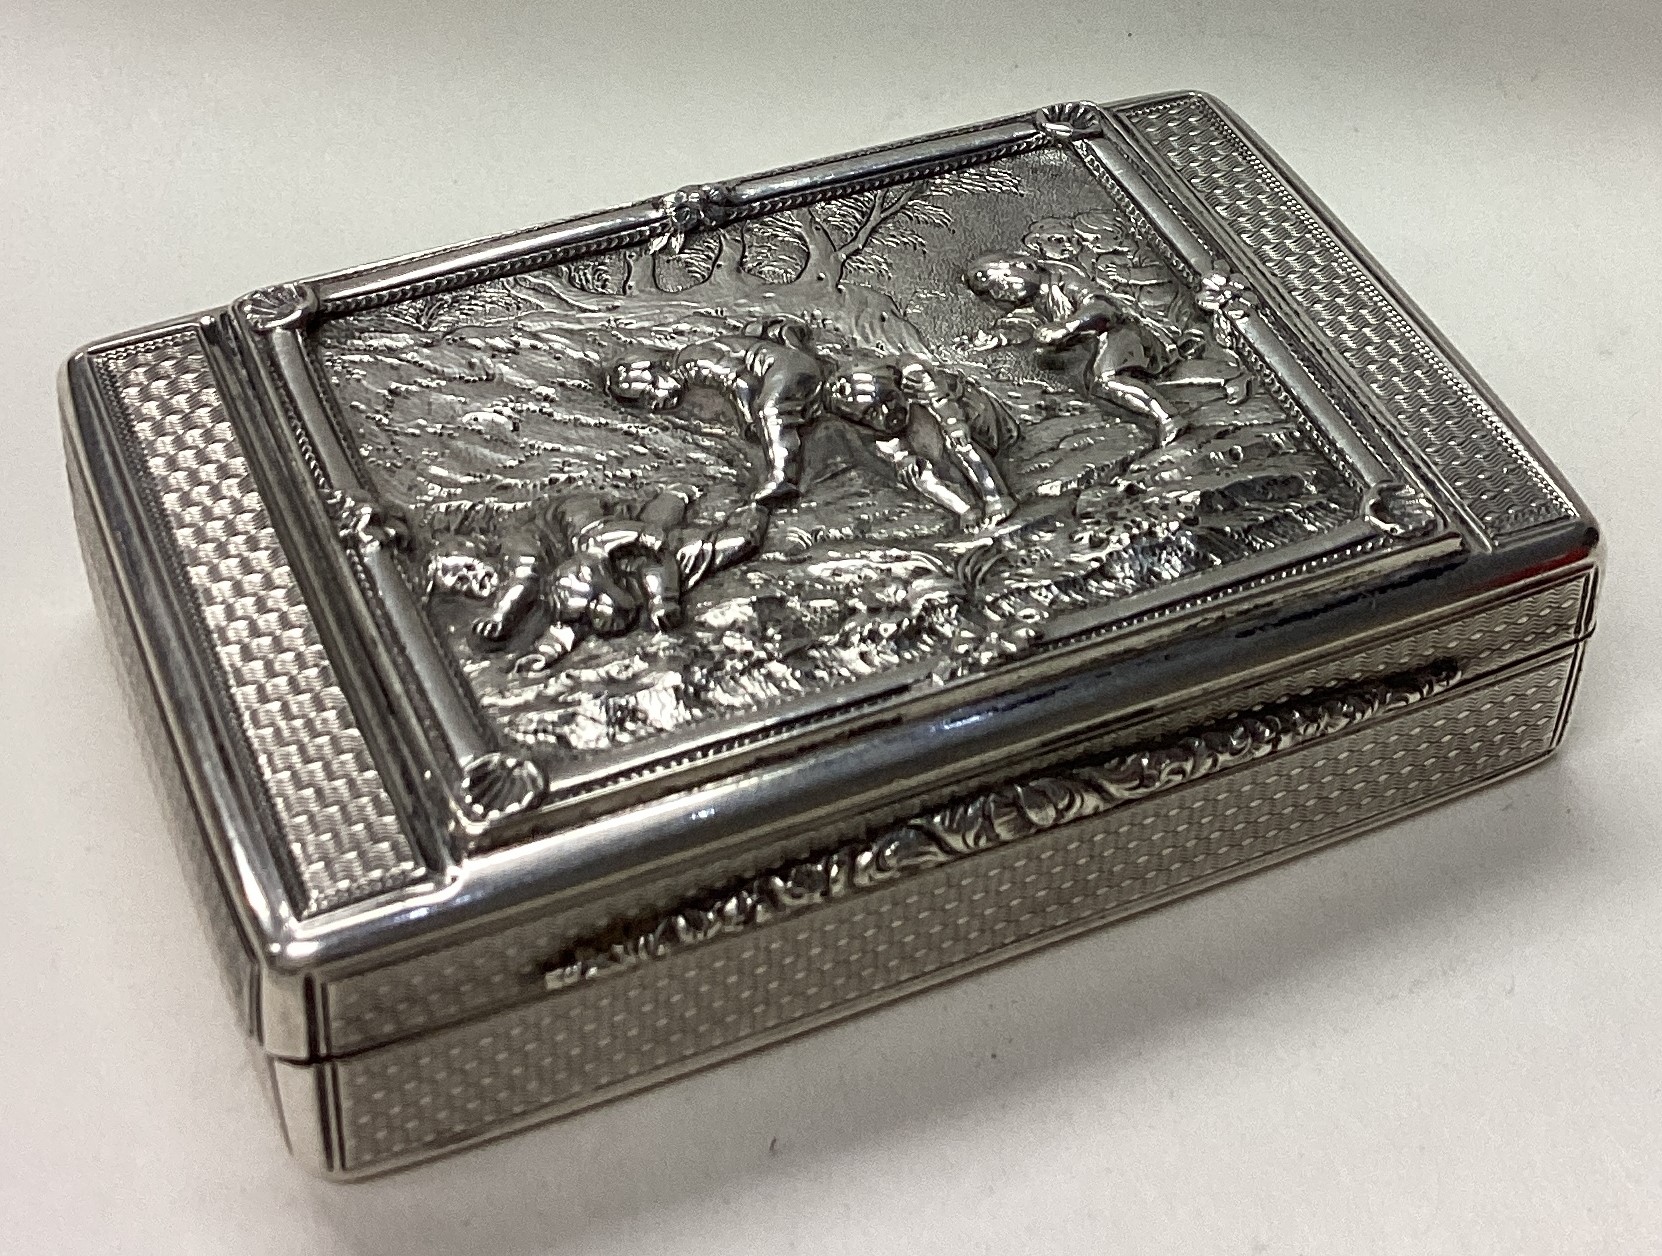 A rare Victorian silver snuff box cast with figural scenes and trees.